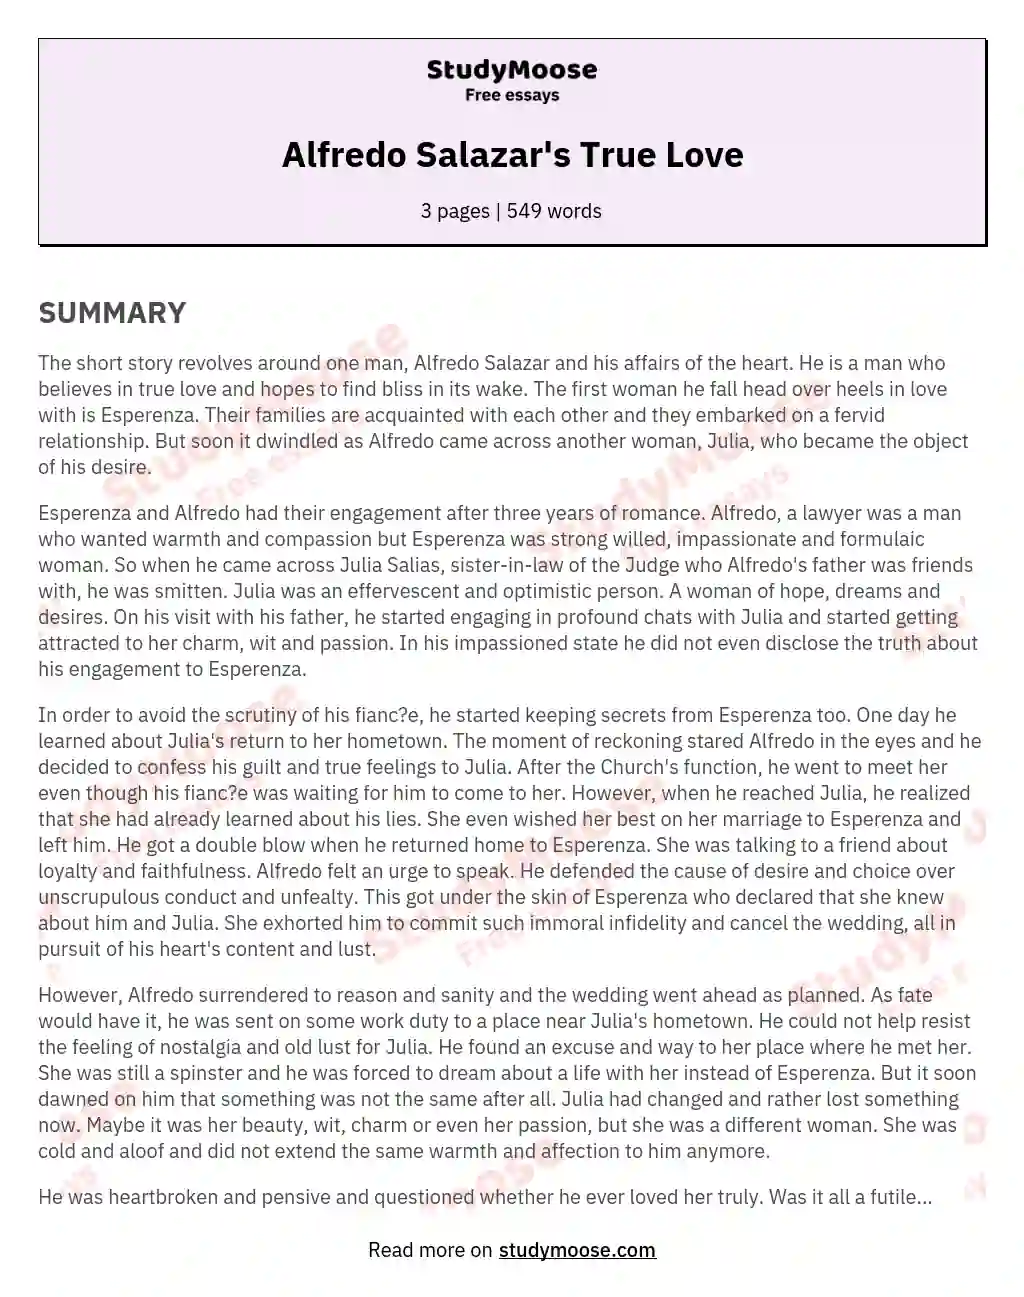 Alfredo Salazar's True Love essay